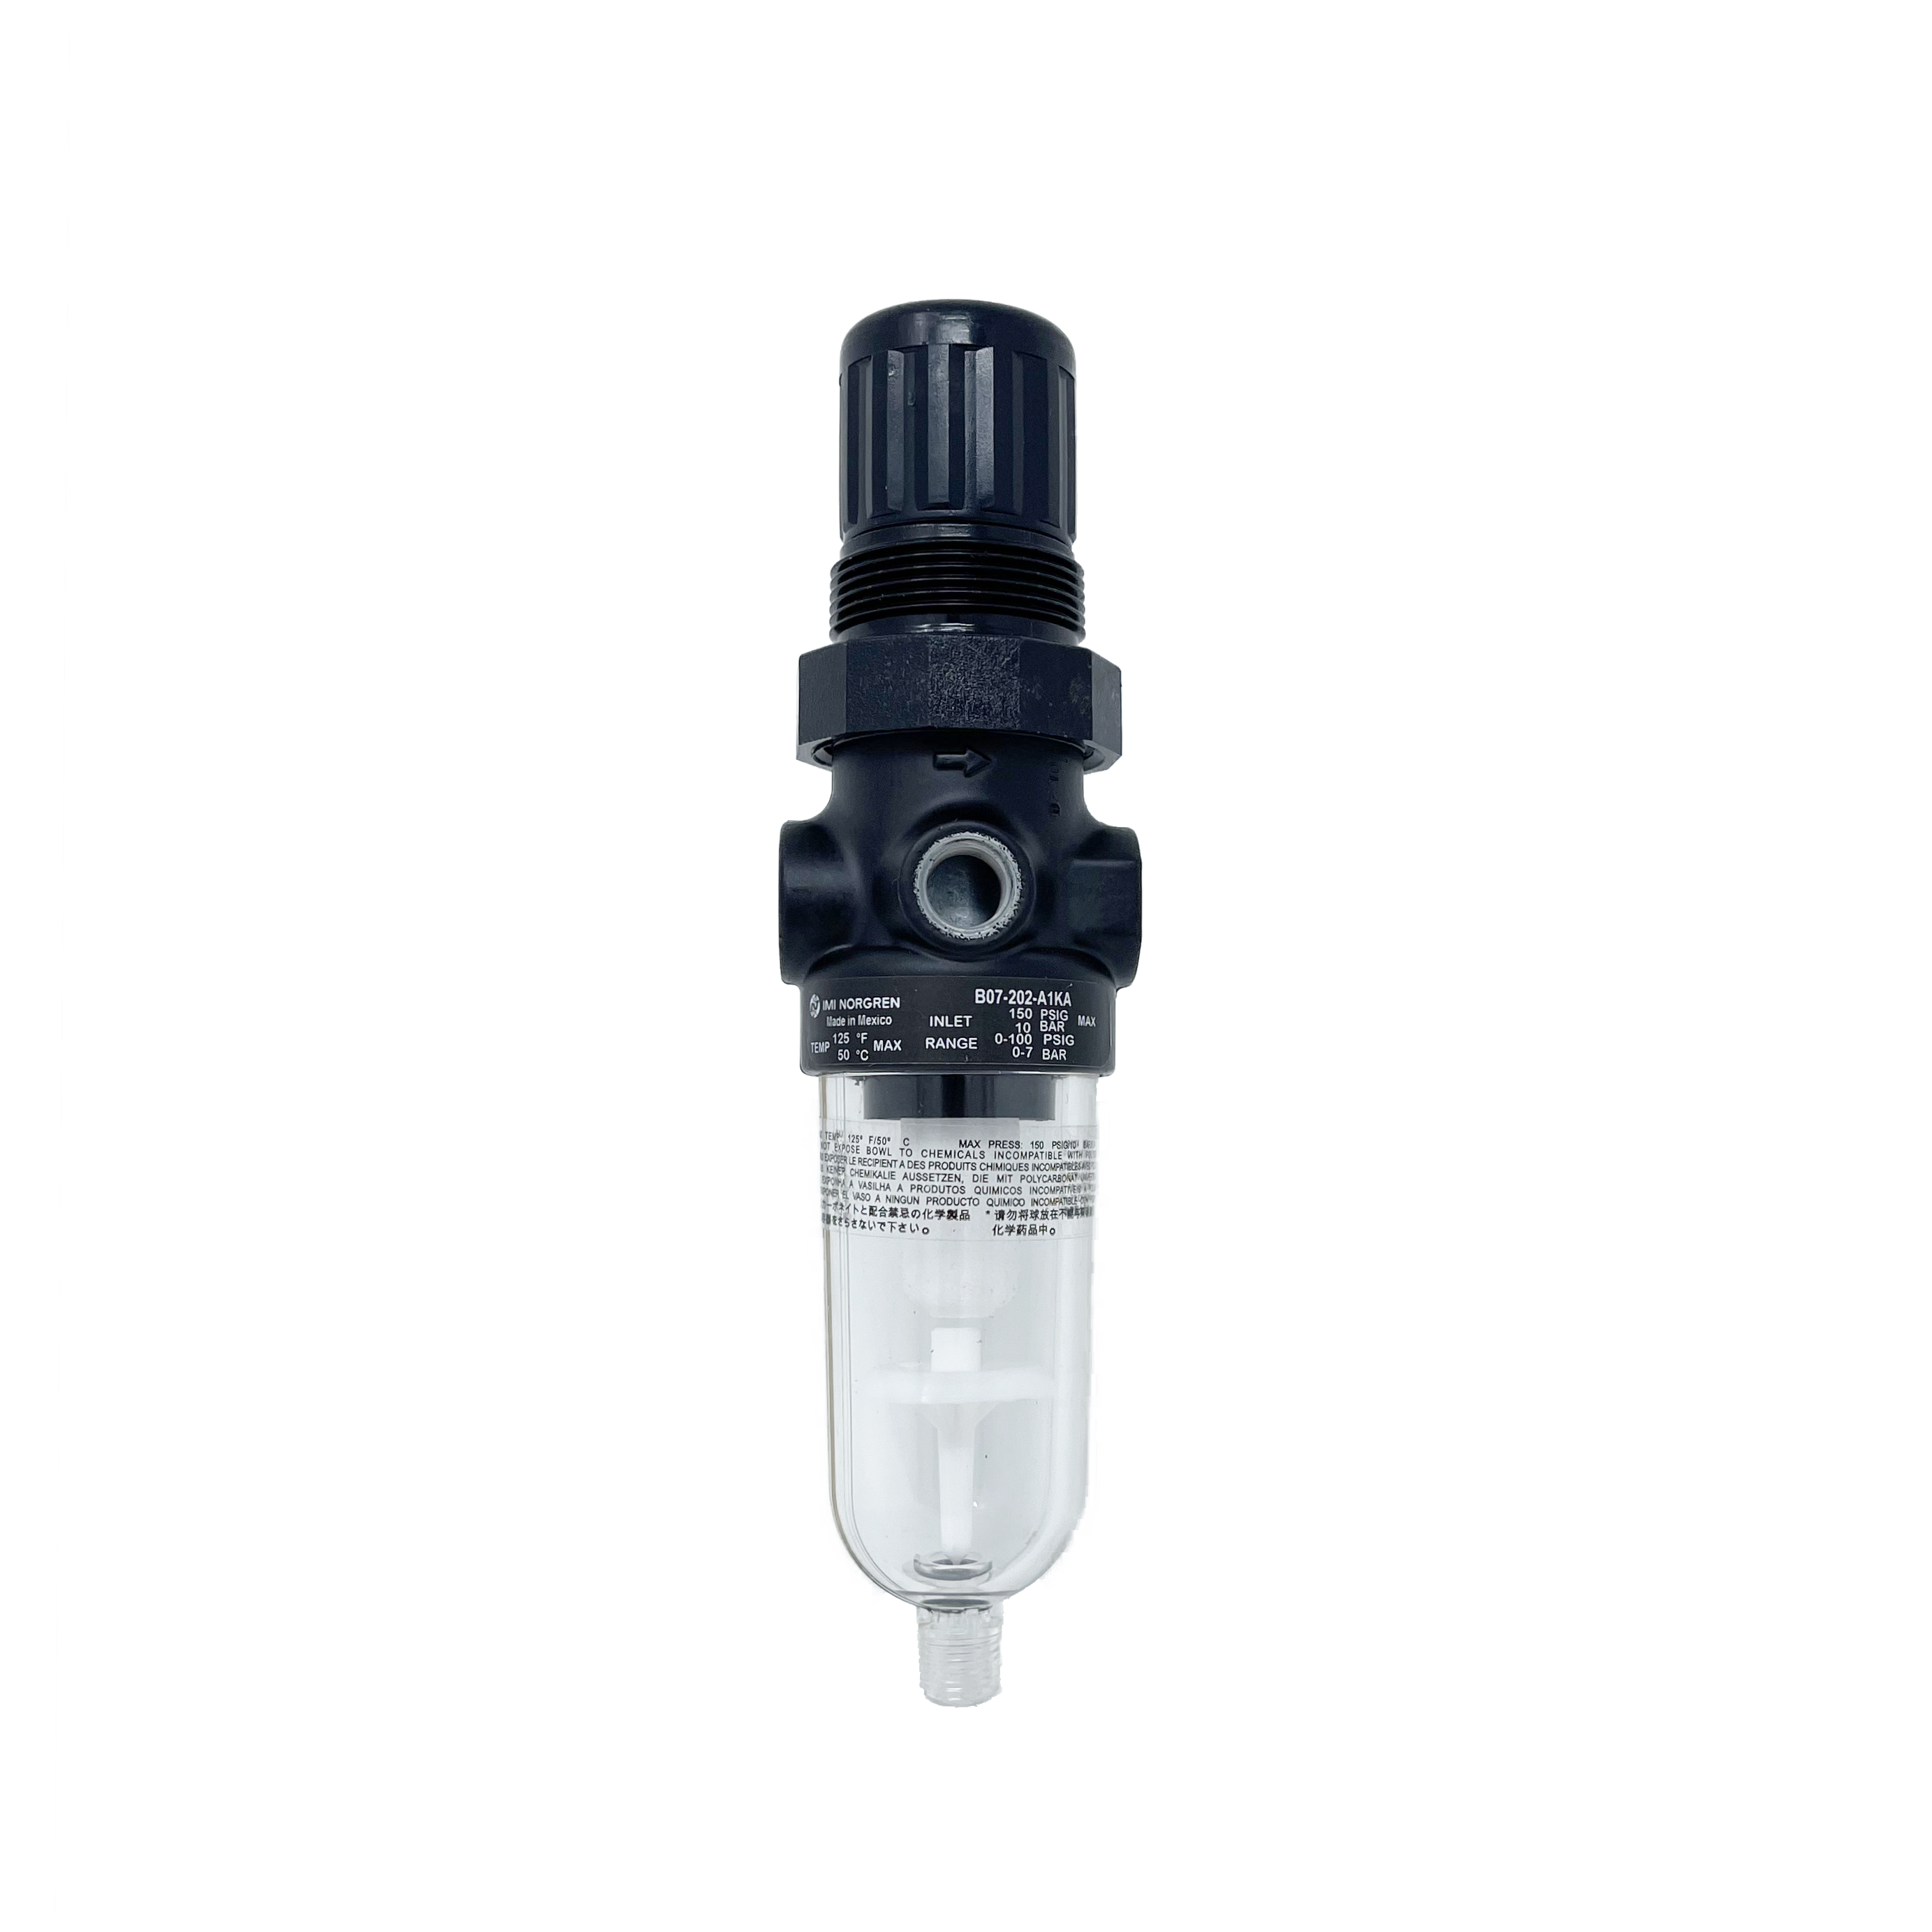 B07-103-M1KA : Norgren B07 miniature filter/regulator, Transparent Bowl, Non-Relieving, Without Gauge, Manual Drain, 5-Micron, 5